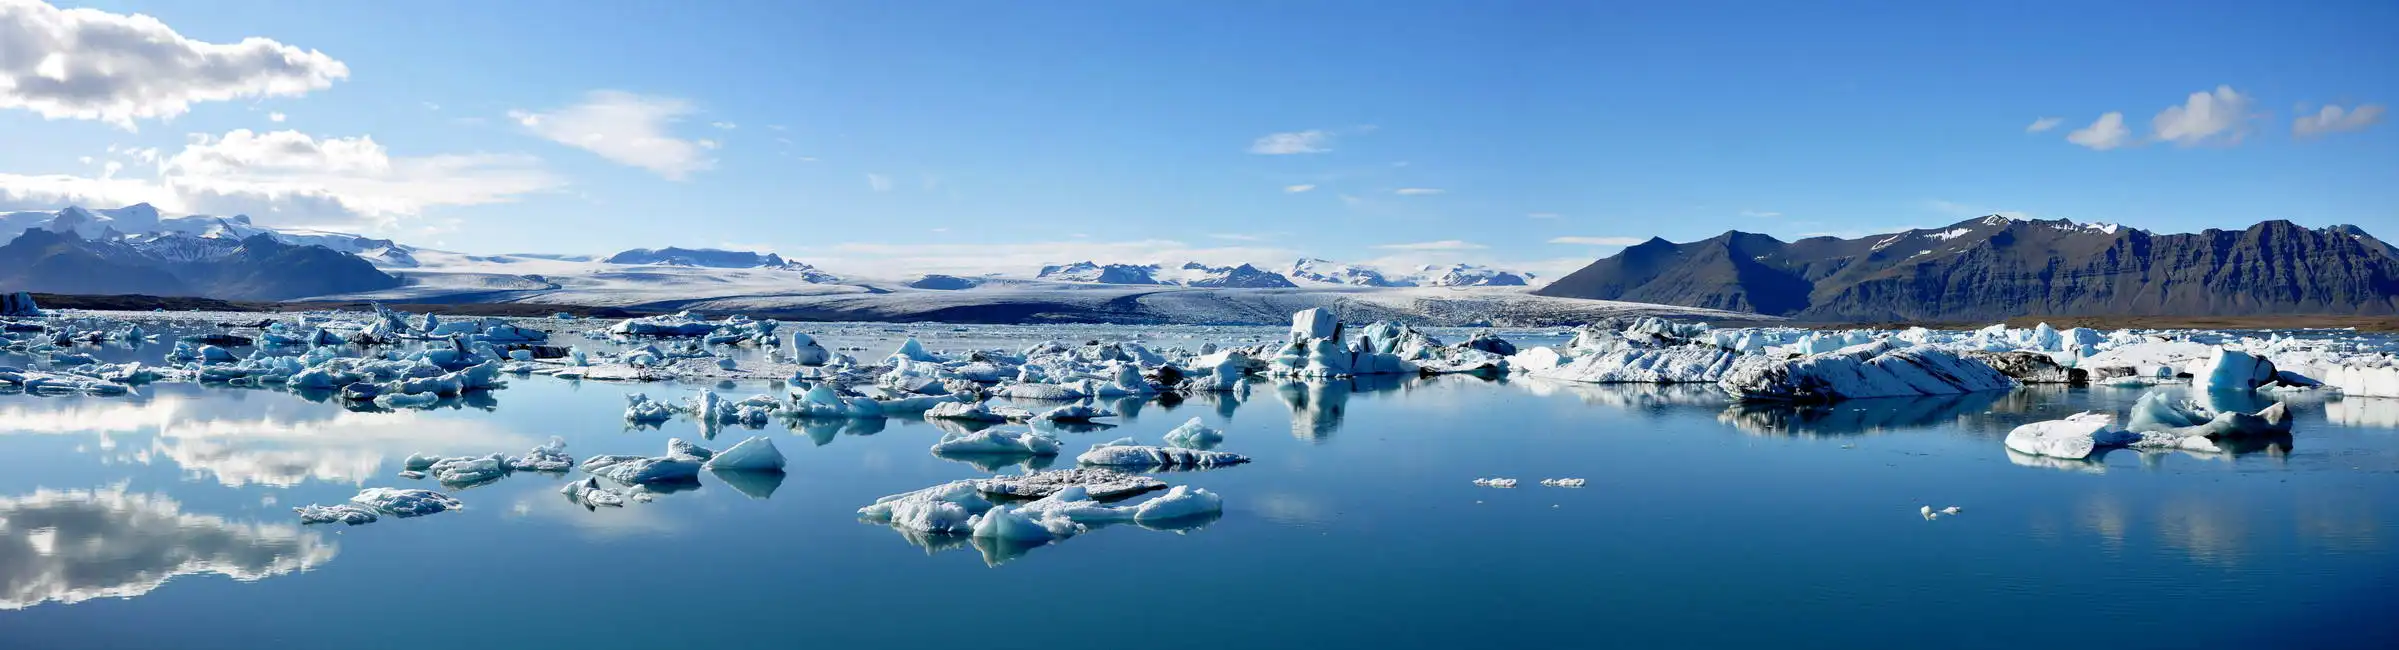 Unknown: Panoramic view of a glacial lake Jokulsarlon